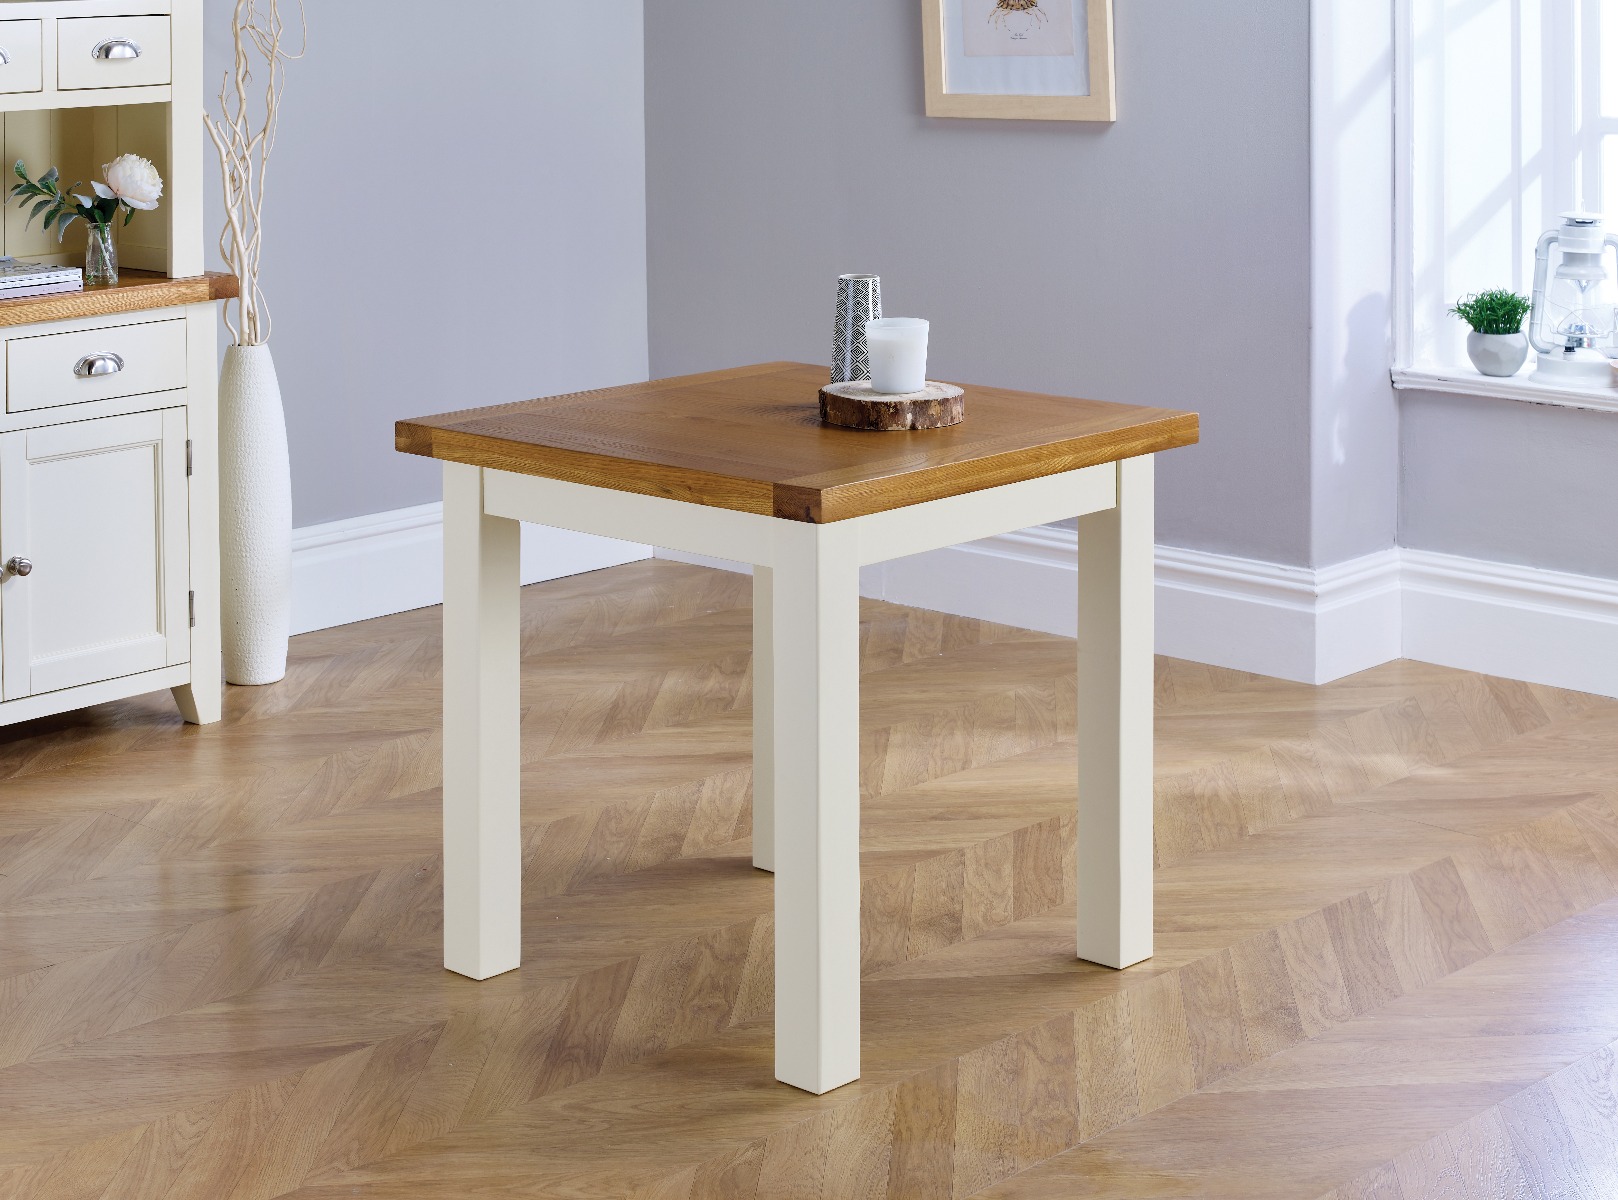 oak small kitchen table